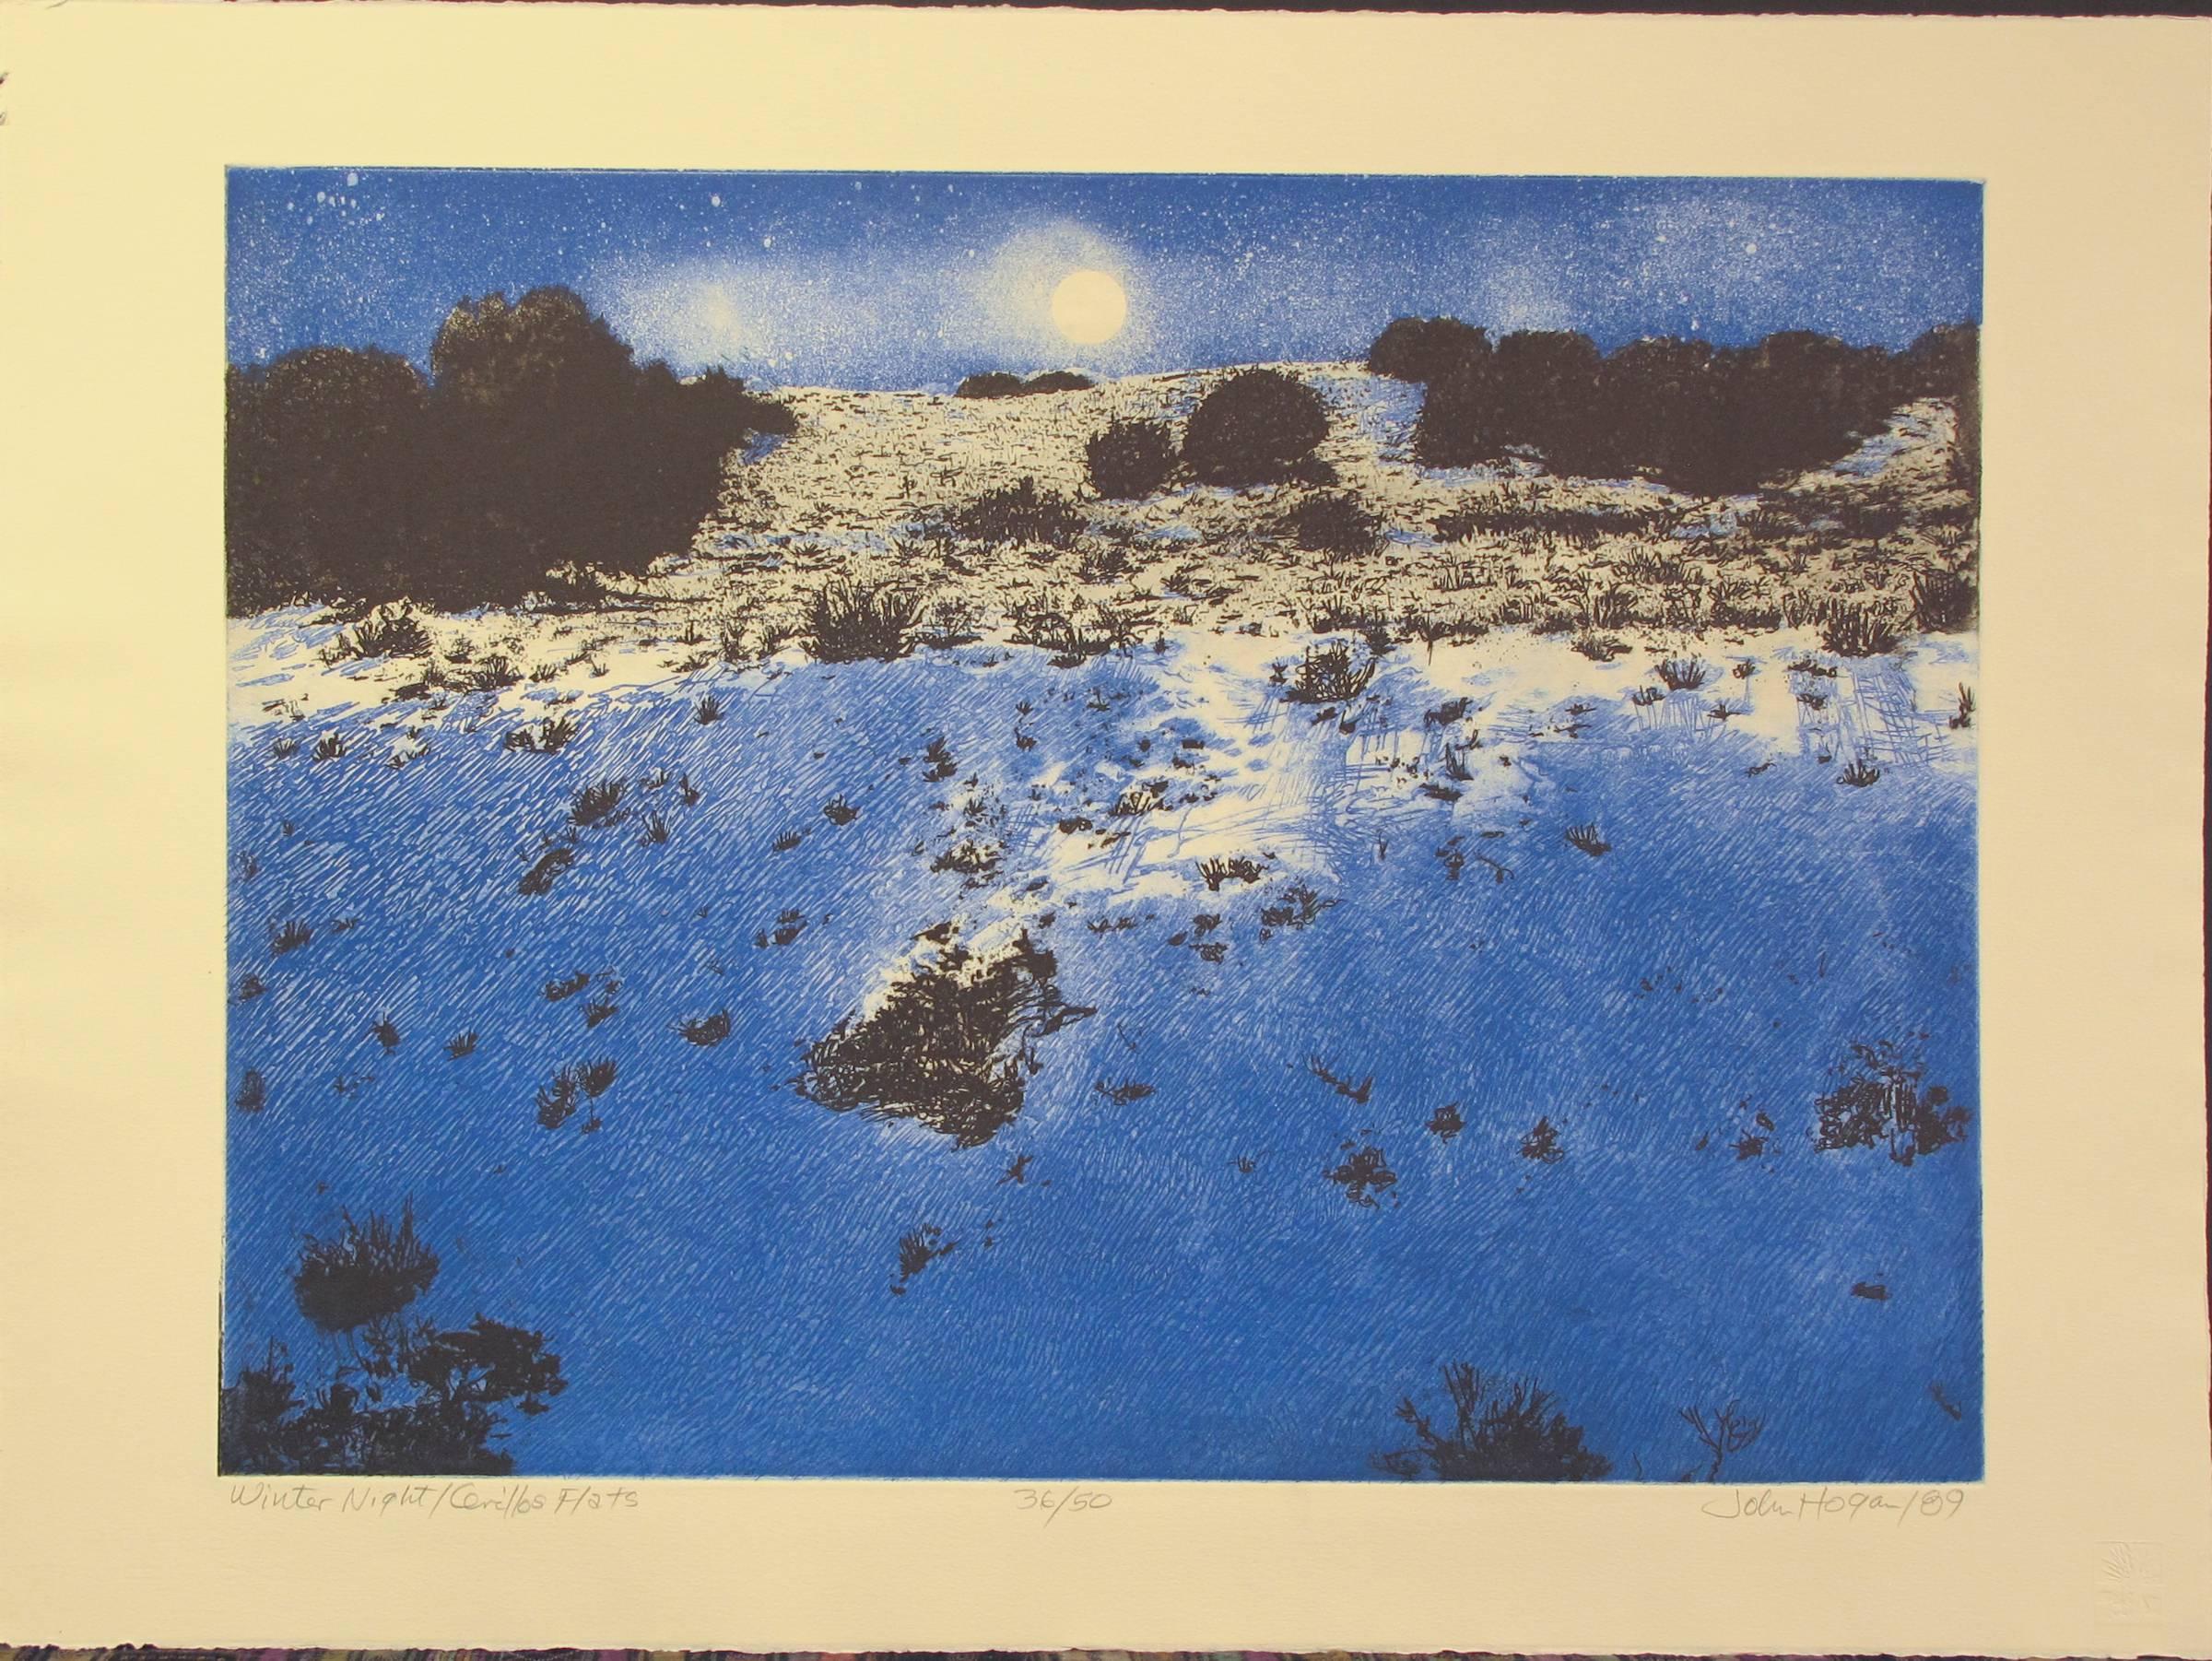 John Hogan Landscape Print - Winter Night, Cerrillos Flats